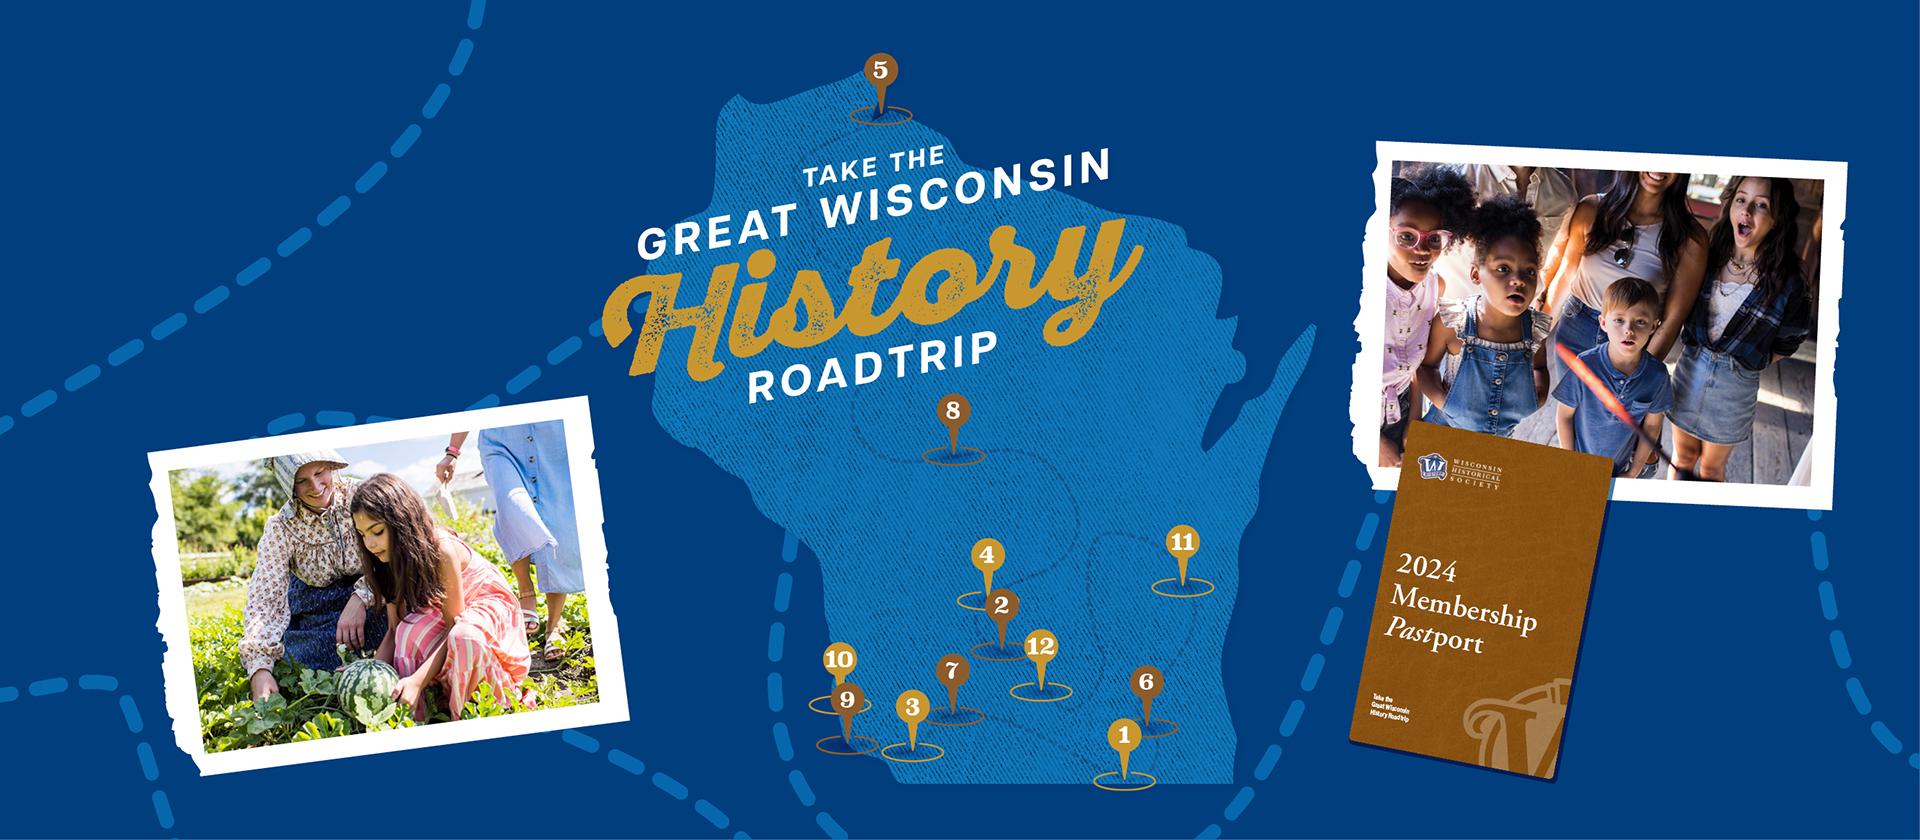 Take the Great Wisconsin History Roadtrip